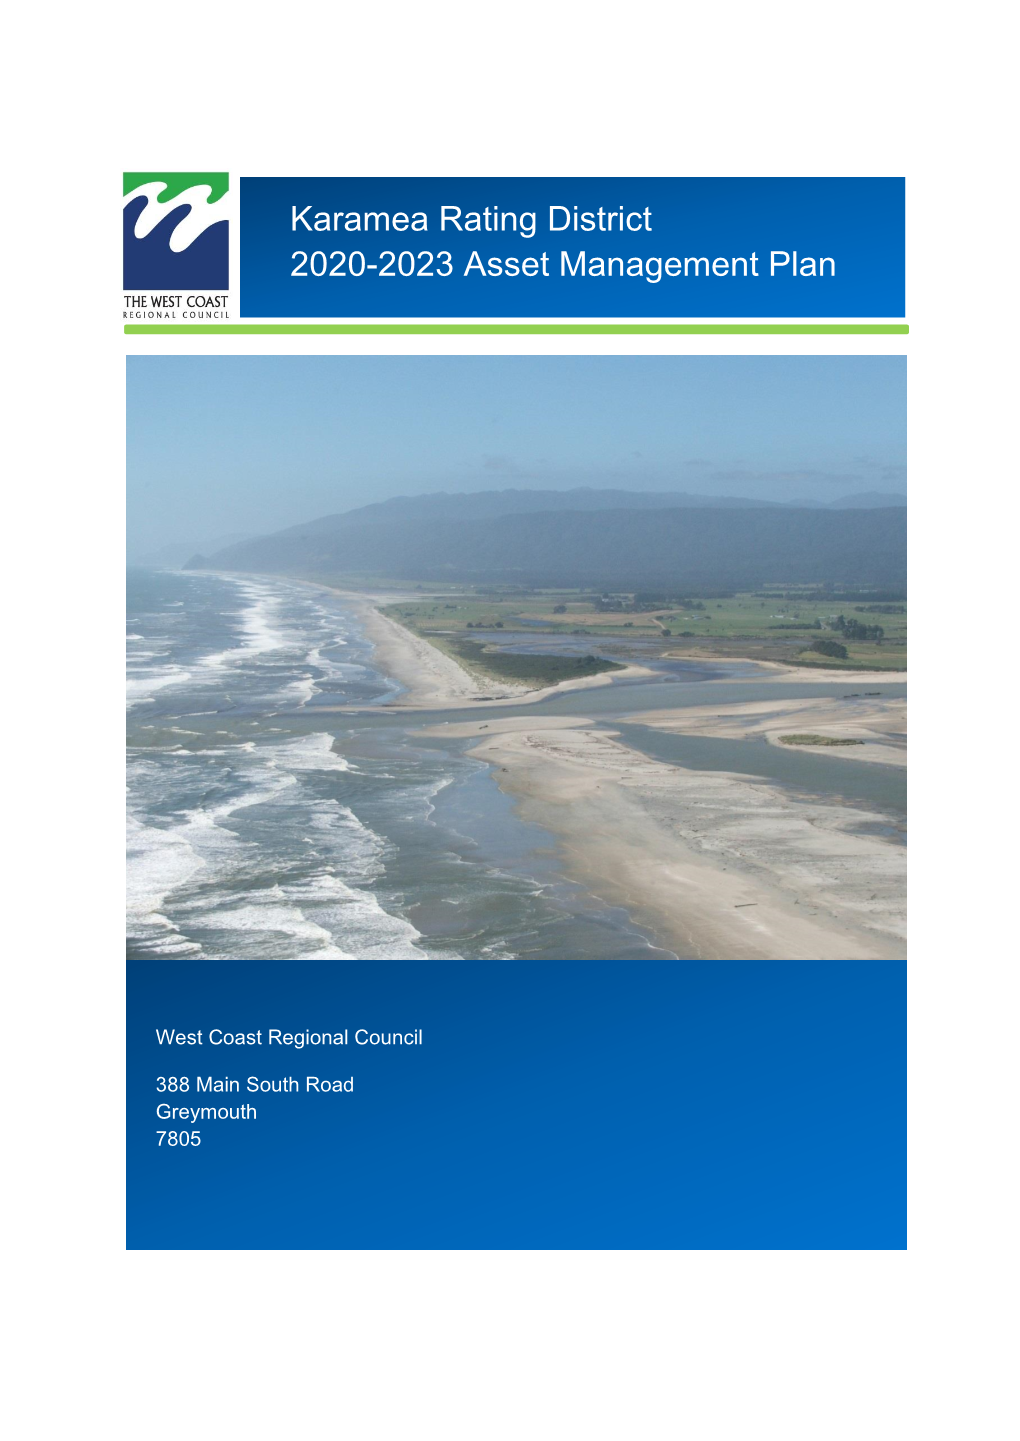 Karamea Rating District 2020-2023 Asset Management Plan